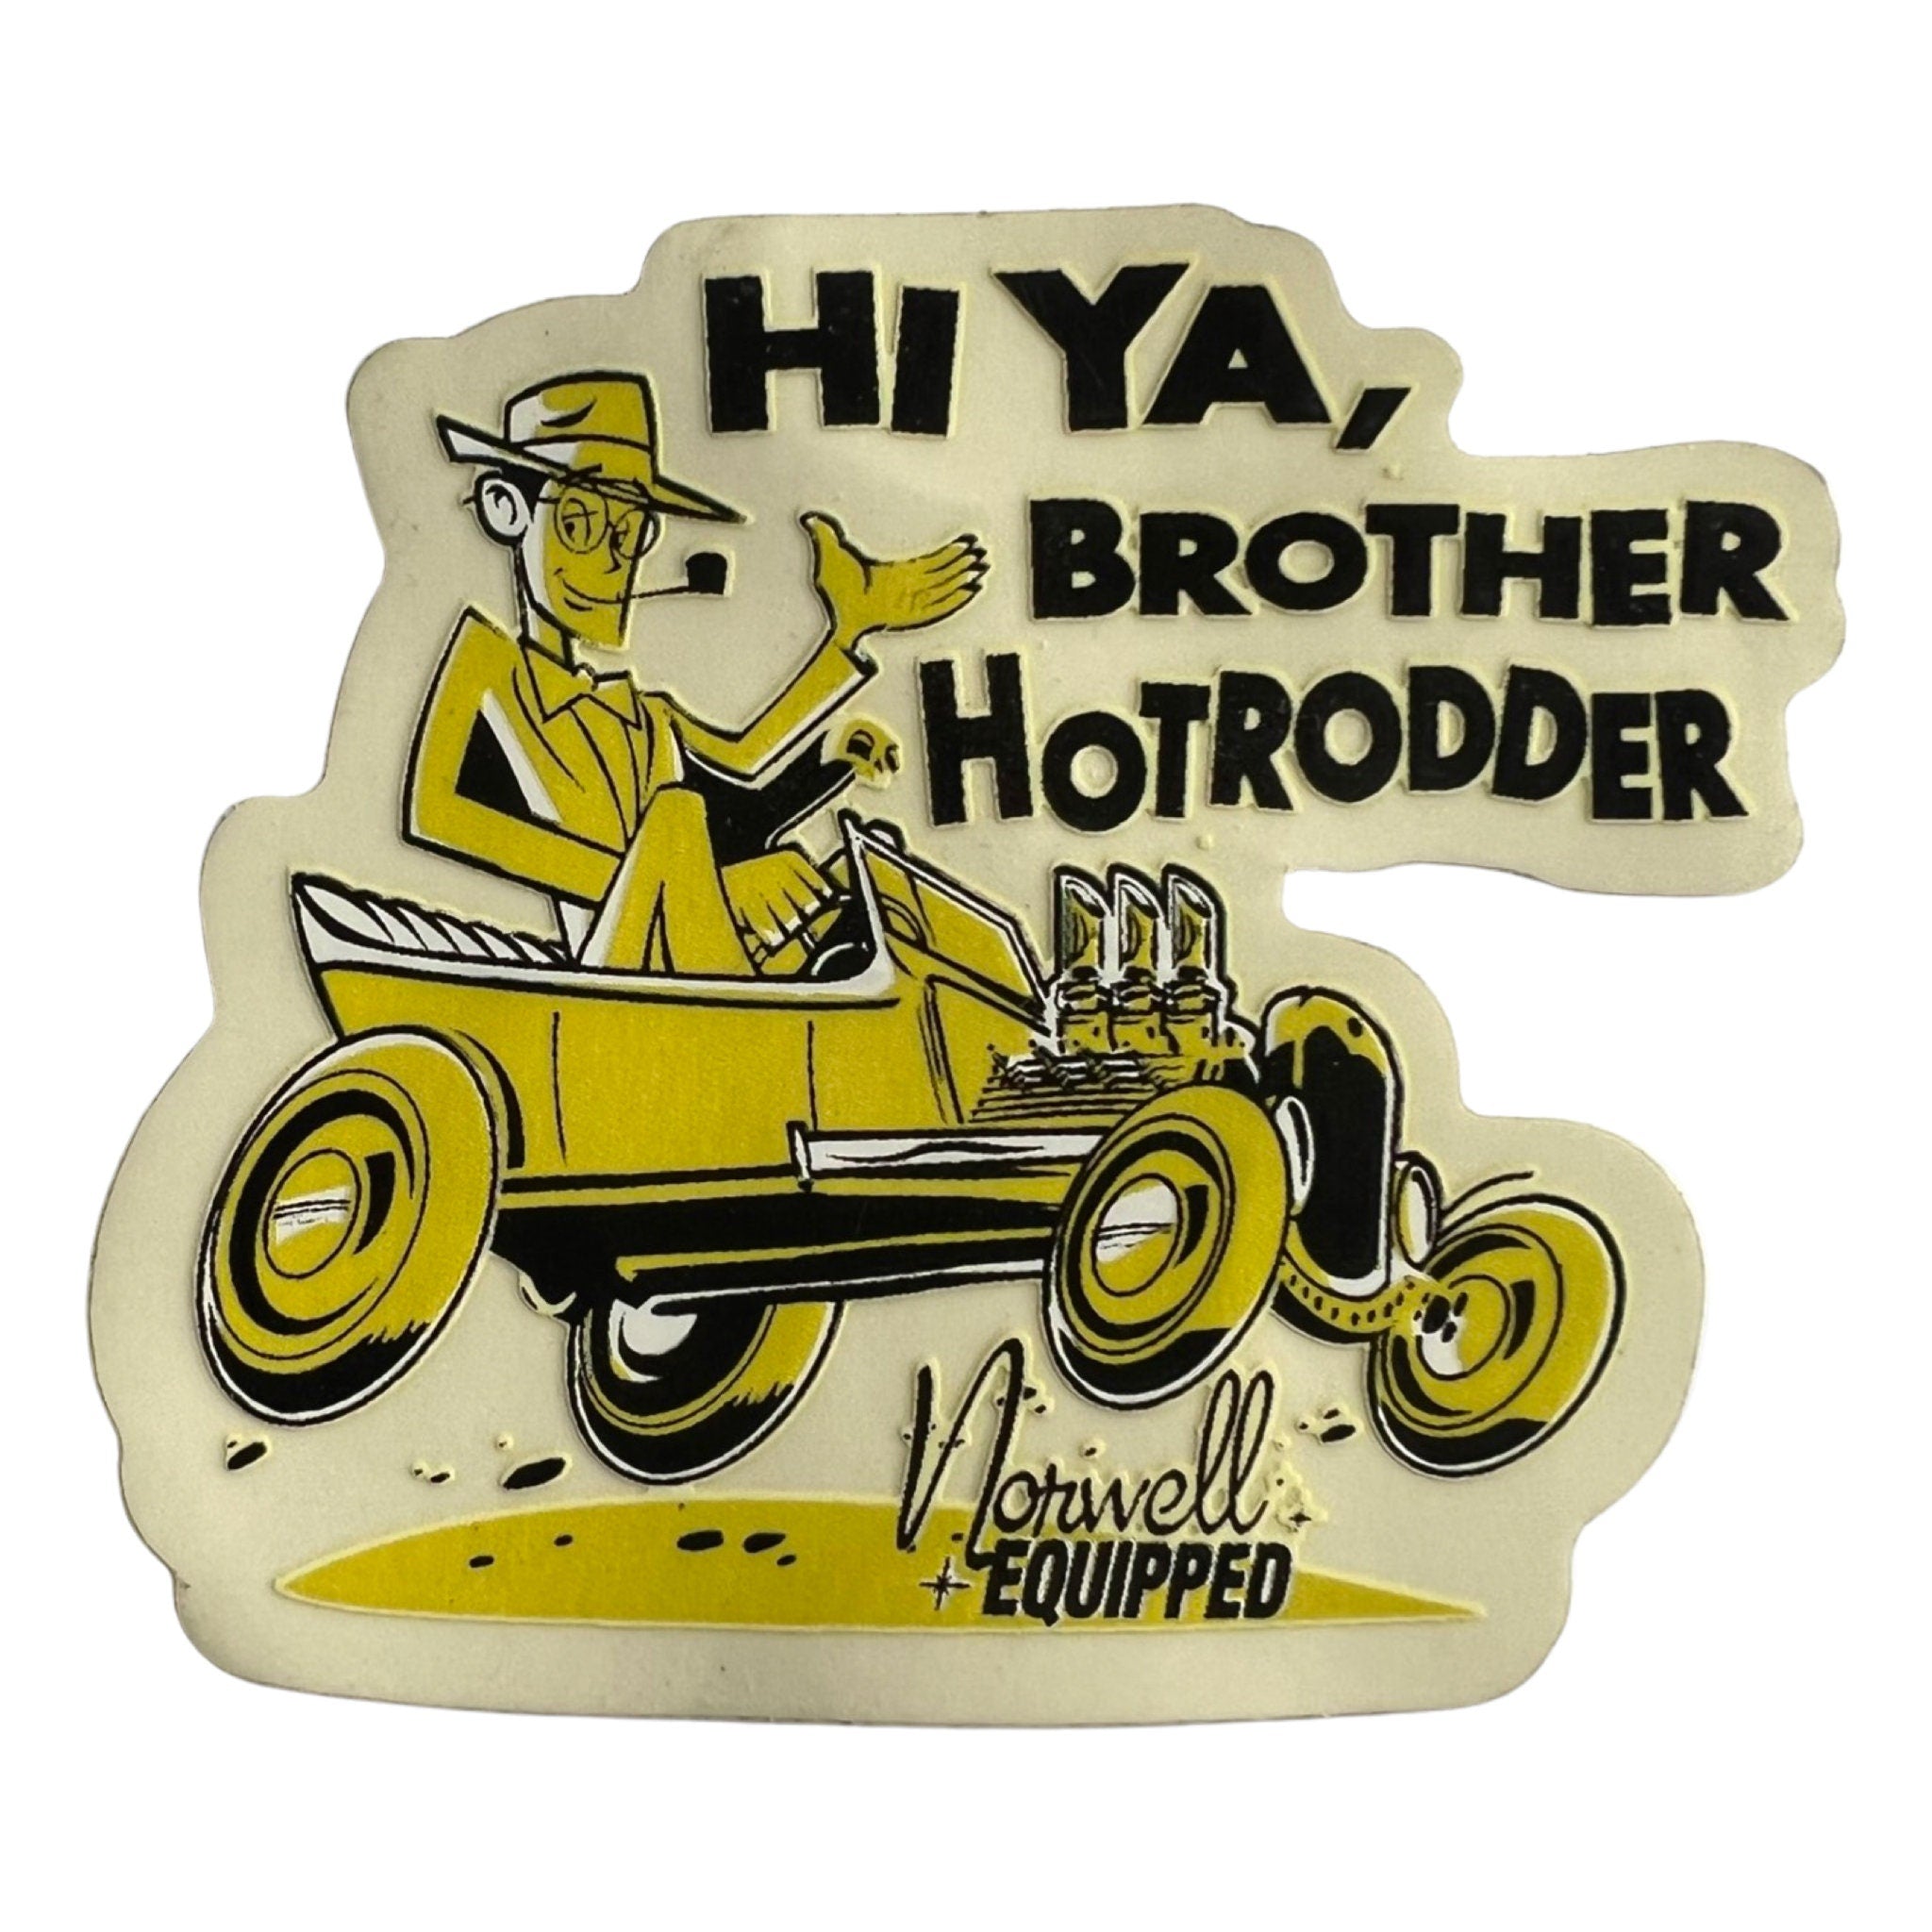 Hi Ya, Brother Hotrodder - Norwell Equipped Sticker